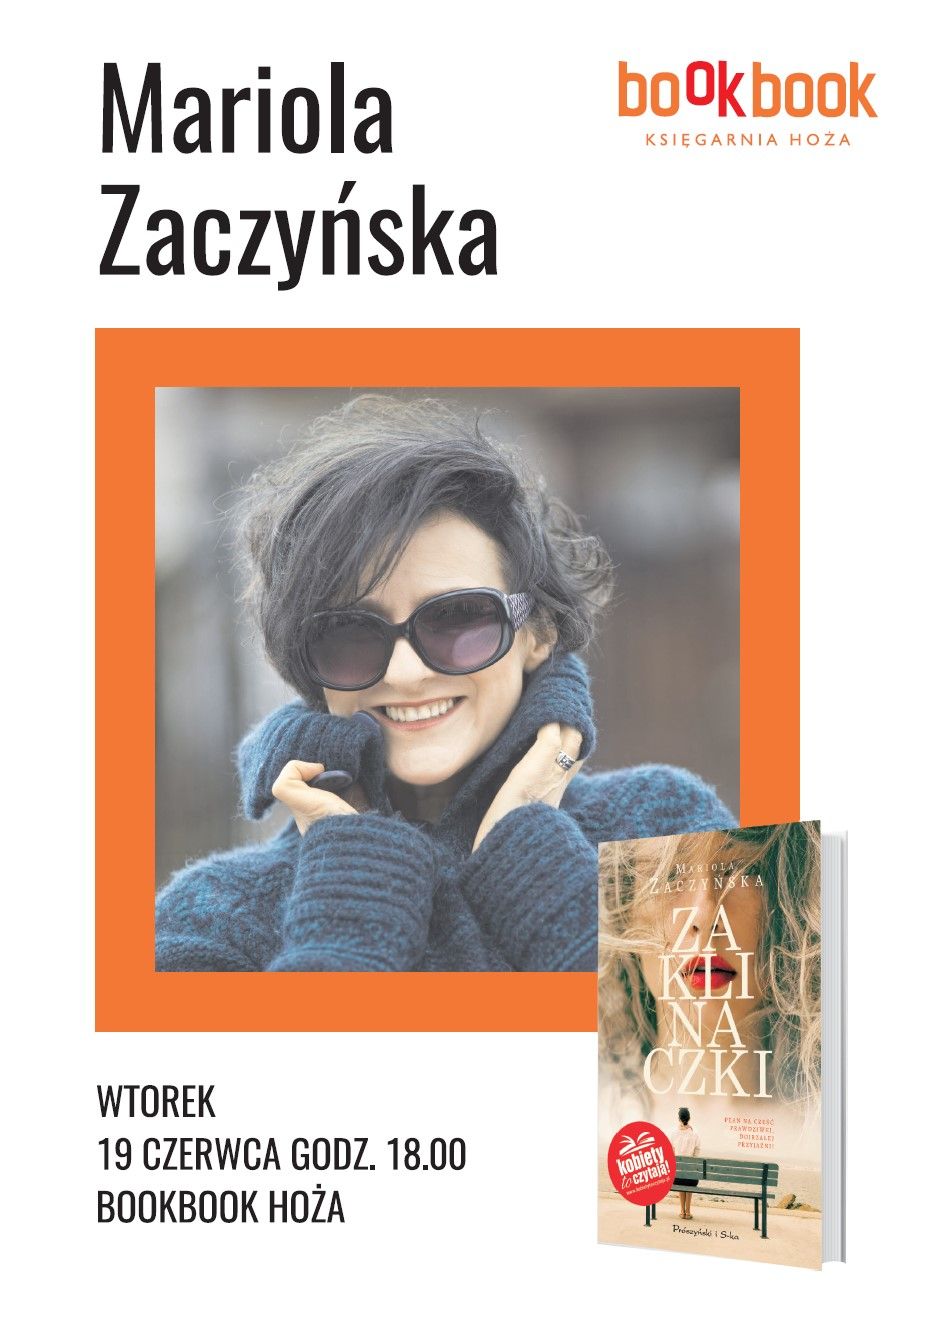 BookBook, spotkanie autorskie,Mariola Zaczyńska